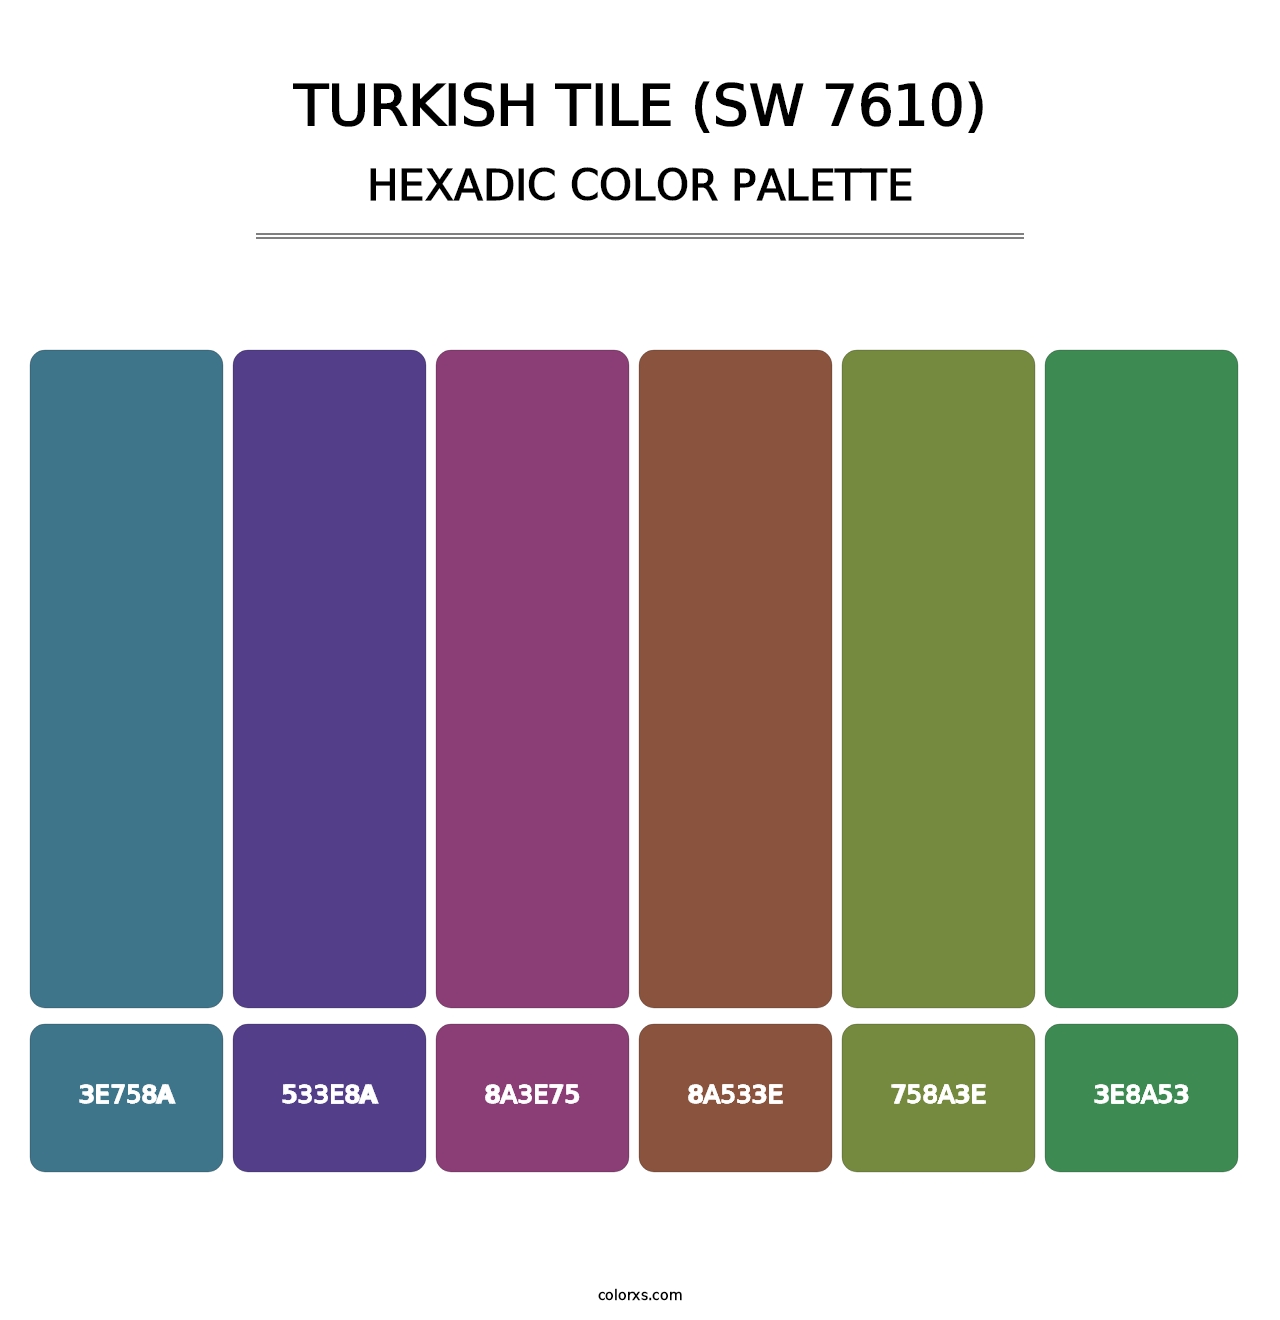 Turkish Tile (SW 7610) - Hexadic Color Palette